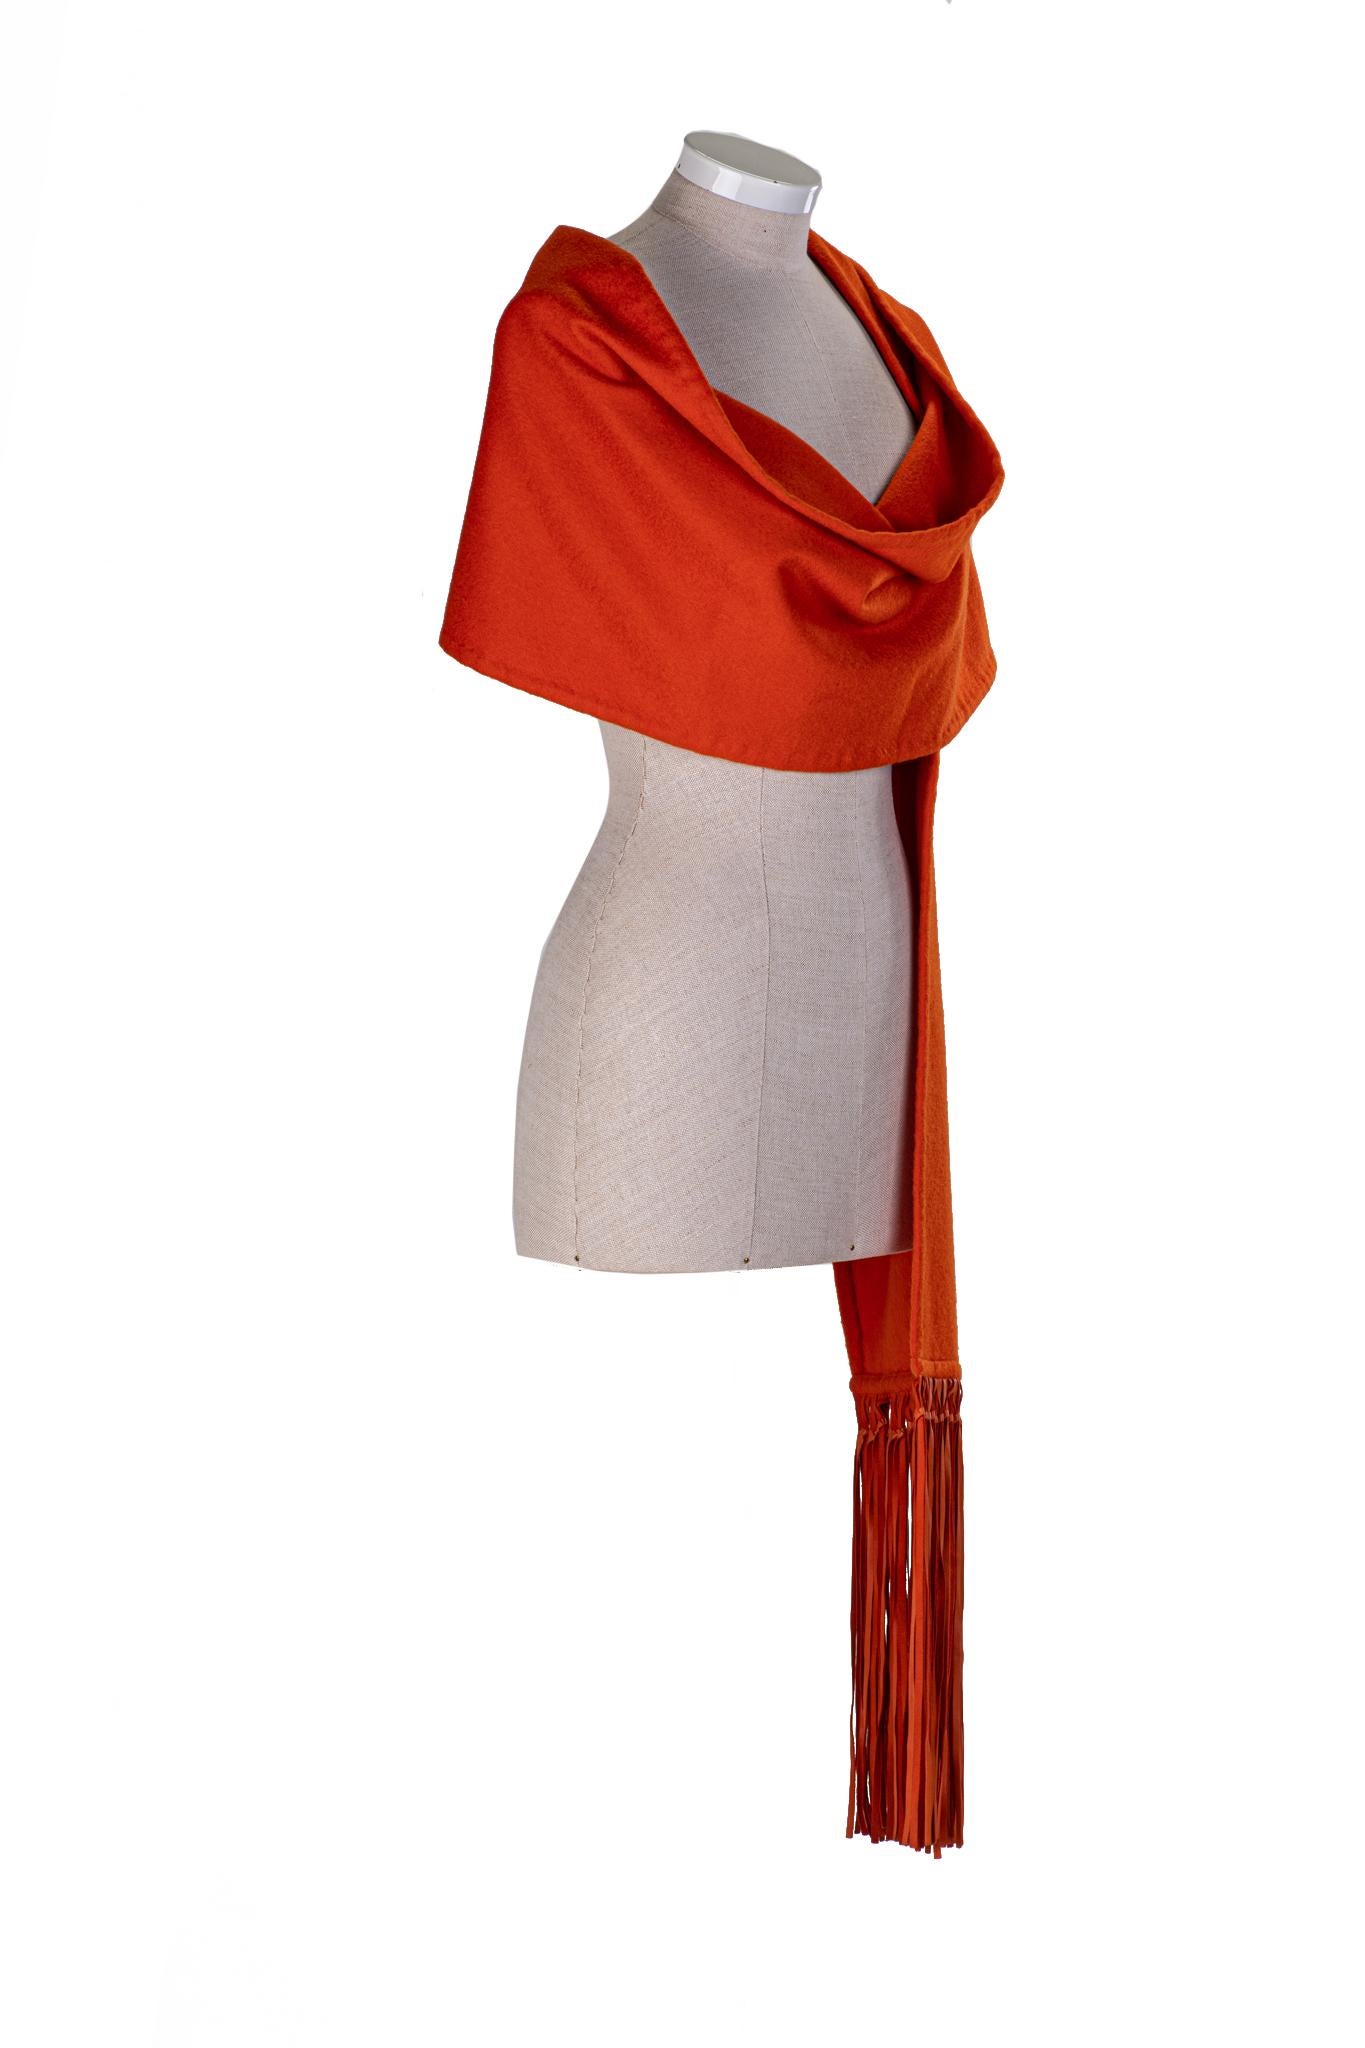 Hermès orange cashmere scarf with leather fringe. Excellent condition. No box.